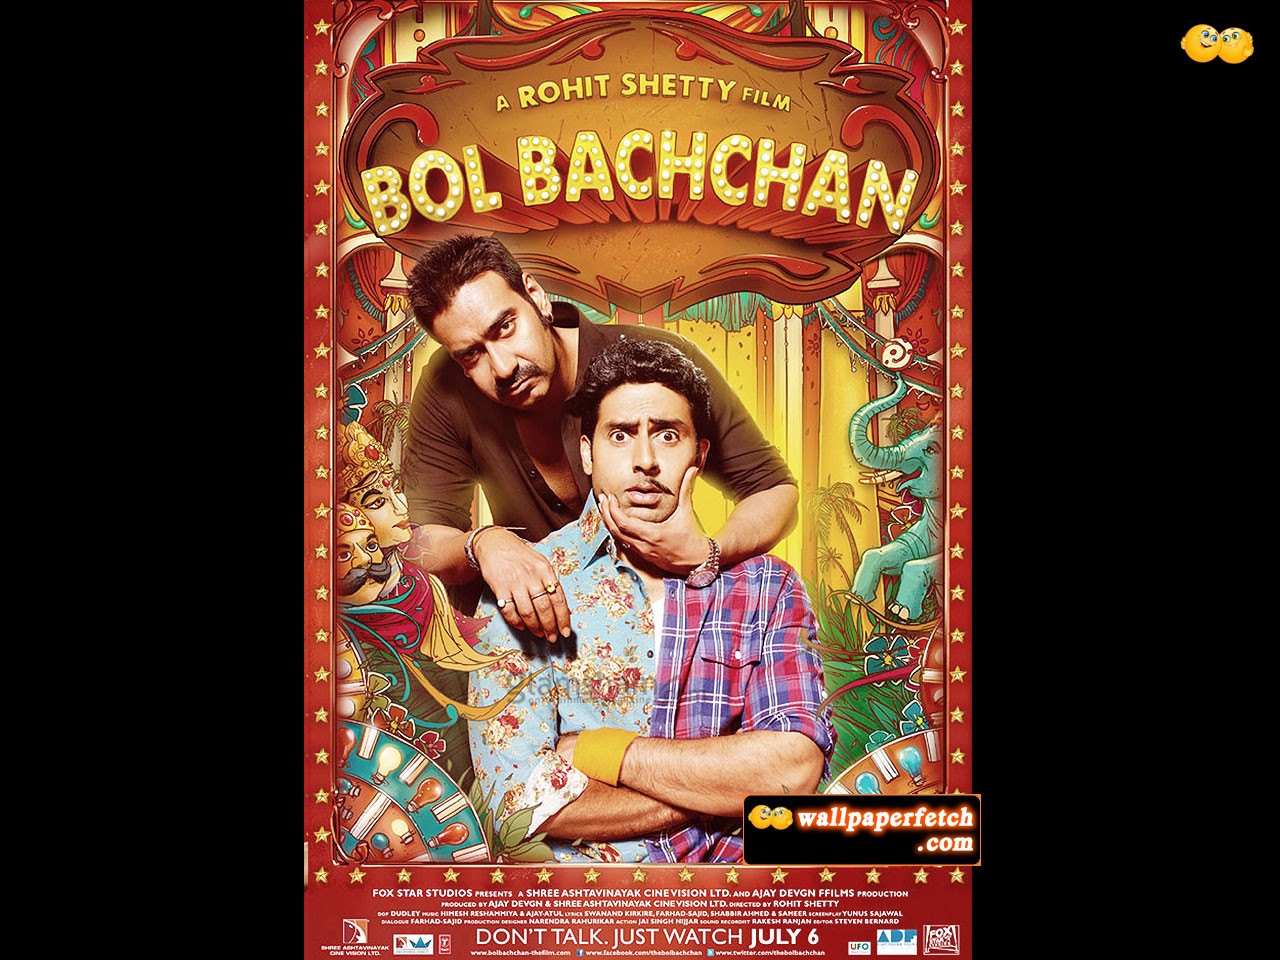 Wallpaper Fetch: Bol Bachchan Movie Wallpapers 2012